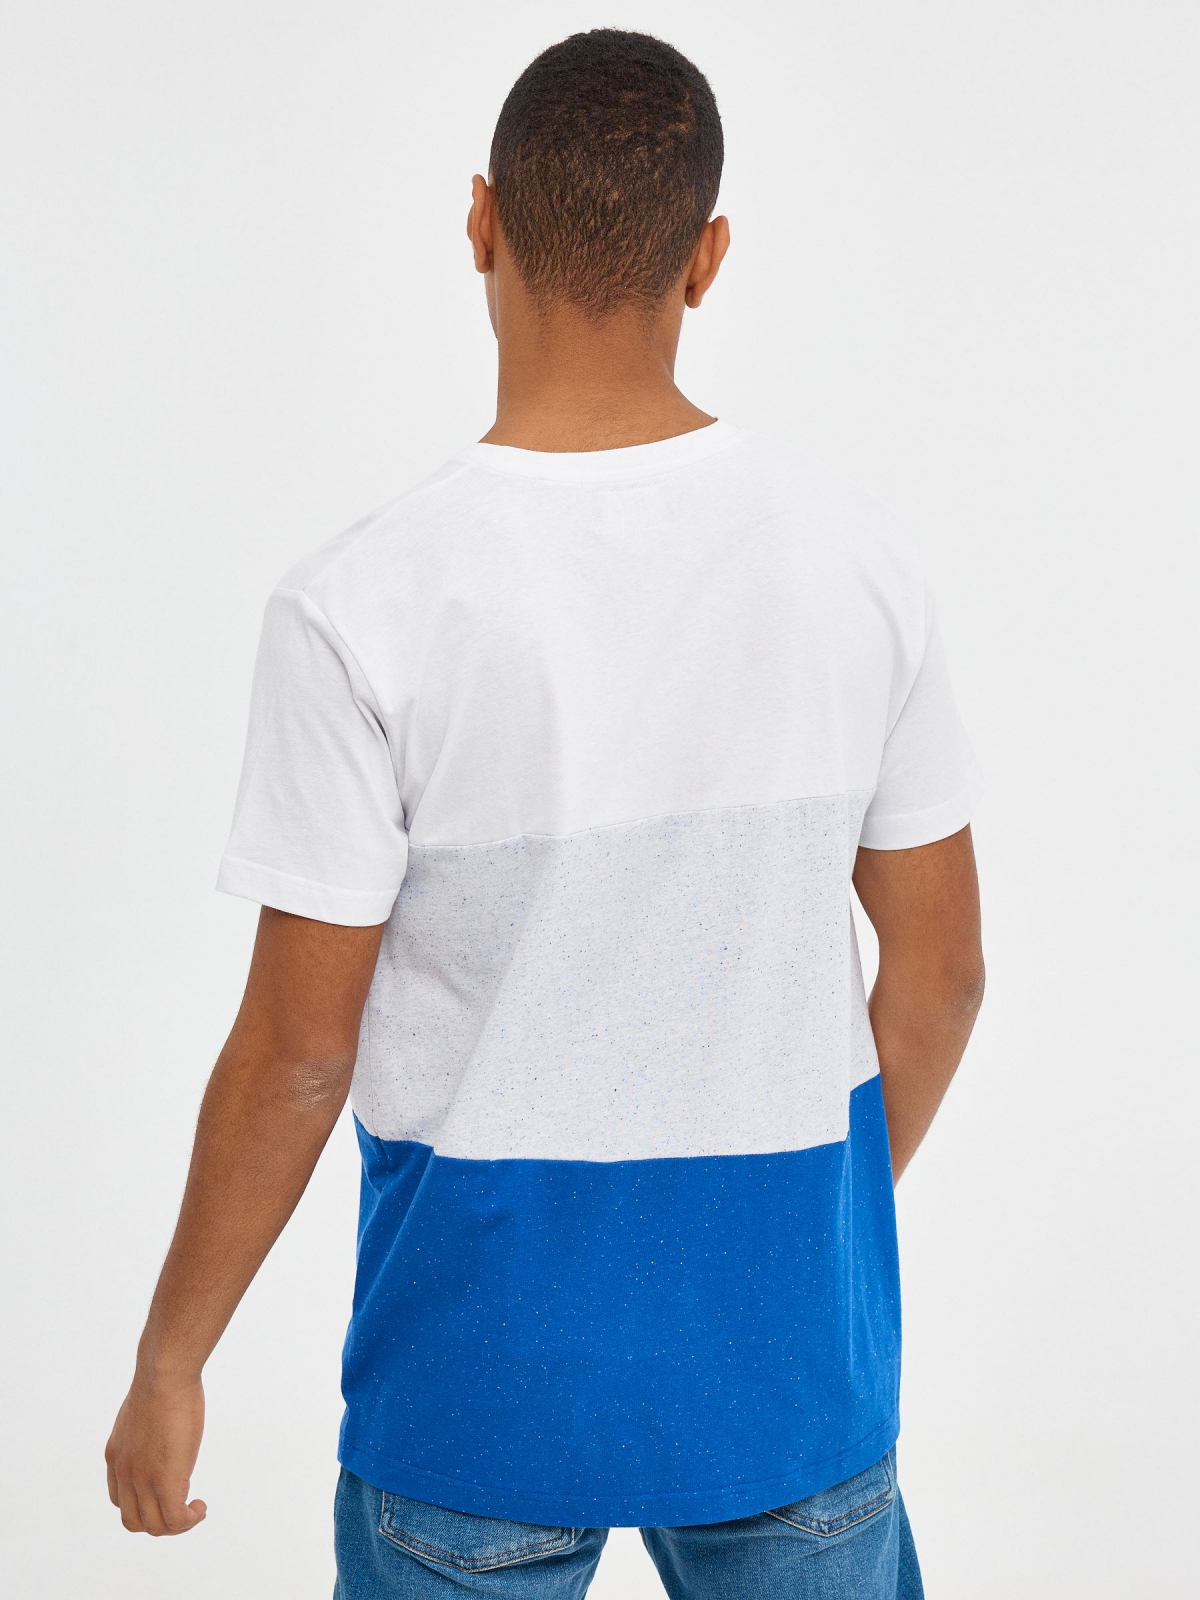 REF LEX IVE T-shirt blue middle back view